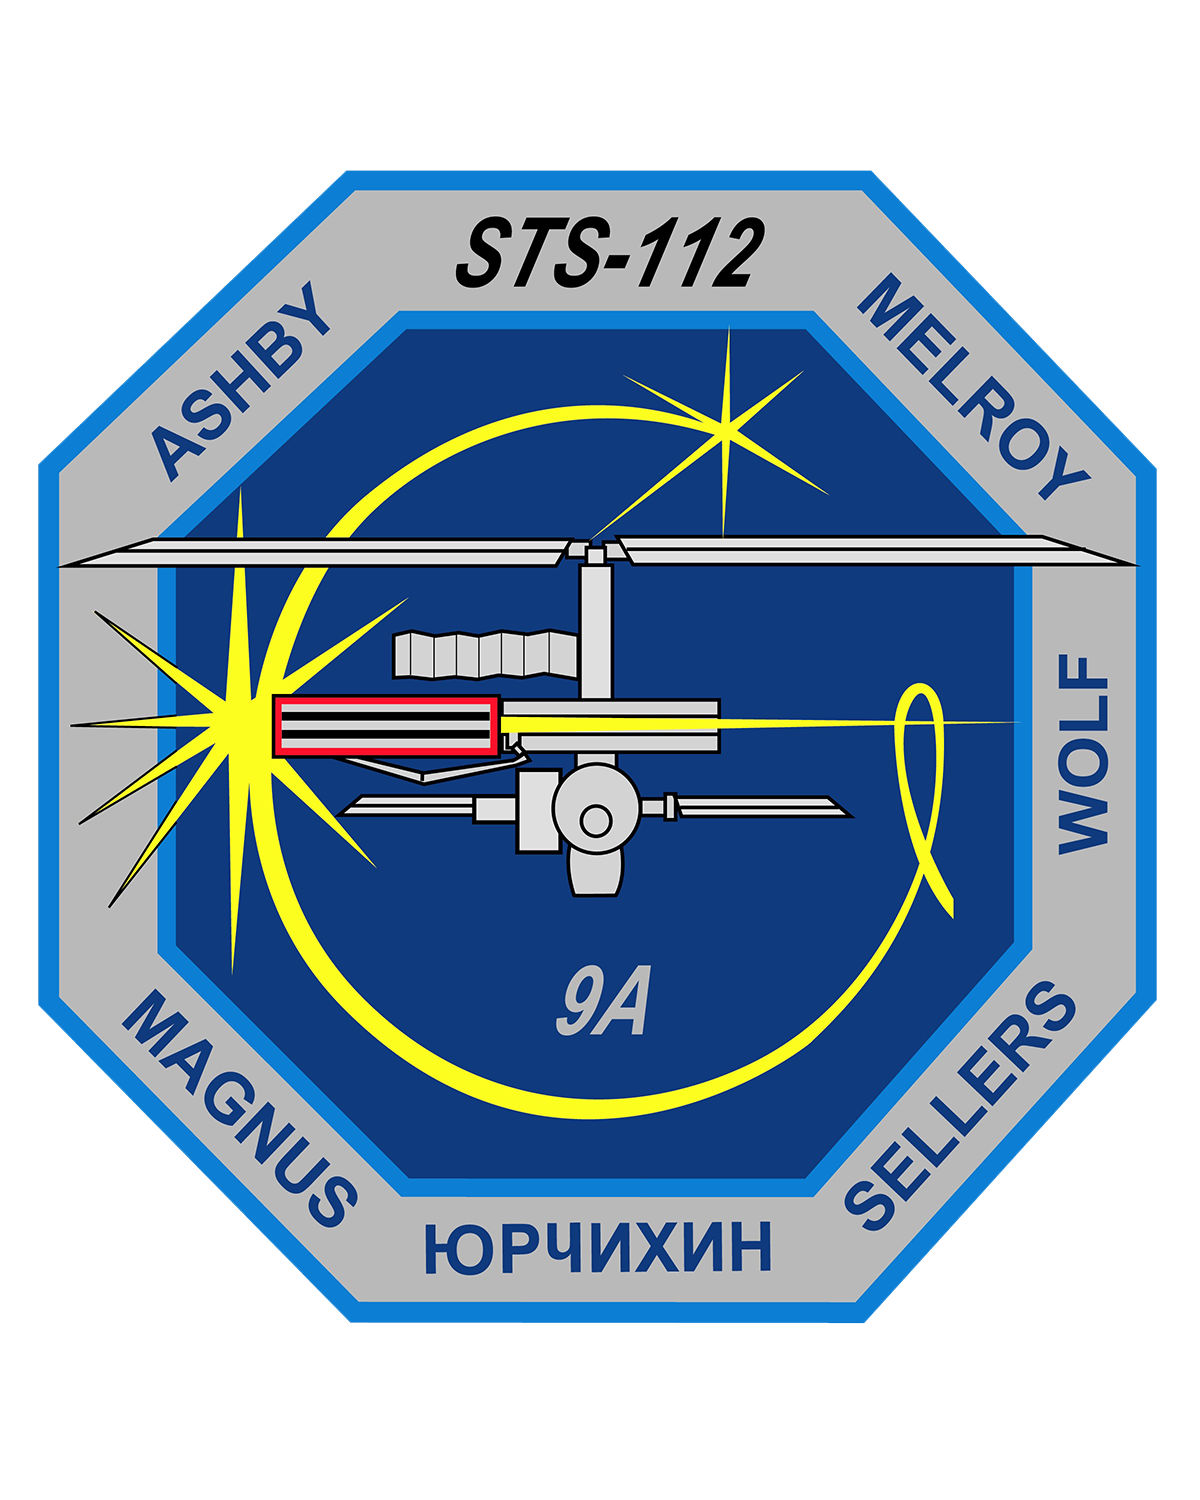 STS-112 (Atlantis)